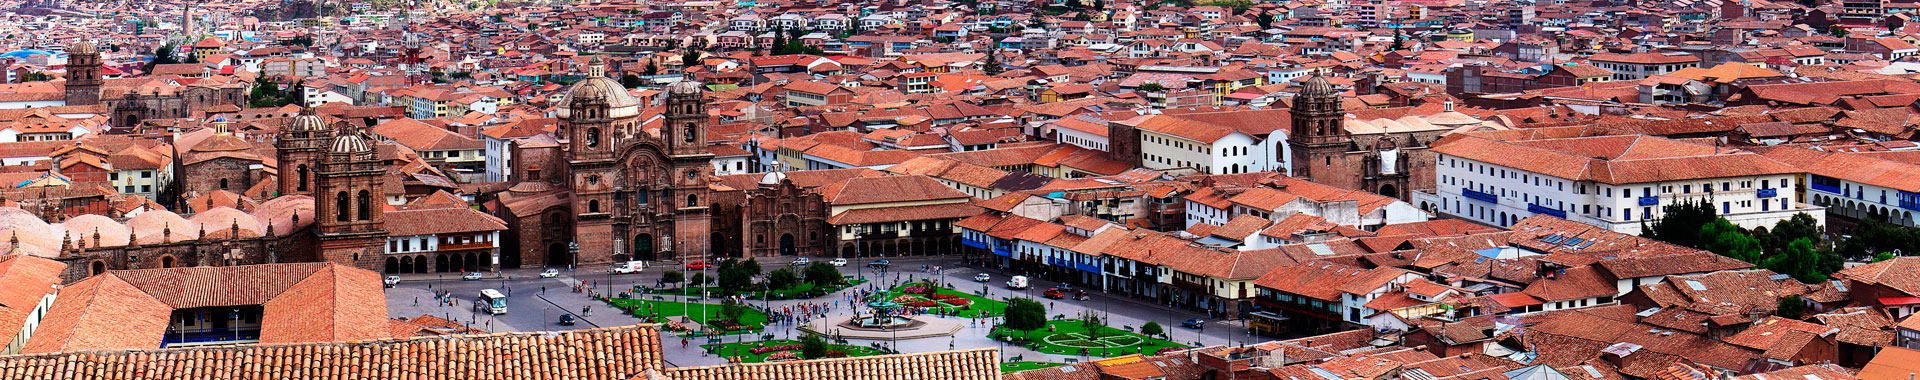 Peru - Cusco - Paseos - City